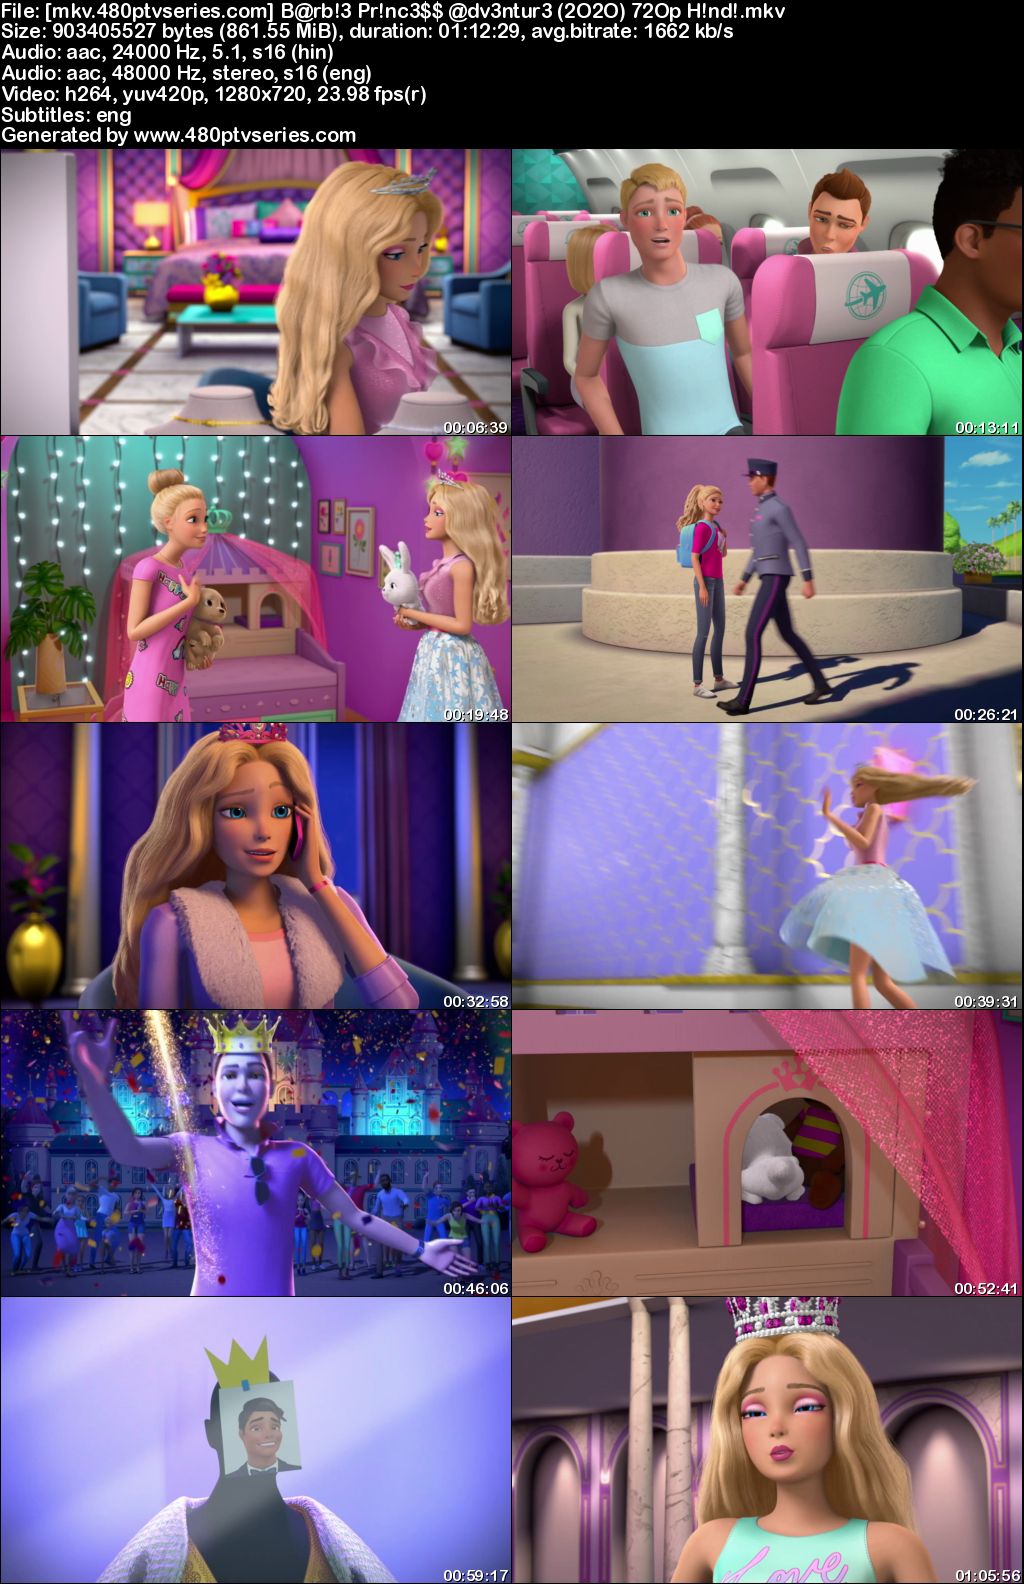 Watch Online Free Barbie Princess Adventure (2020) Full Hindi Dual Audio Movie Download 480p 720p Web-DL